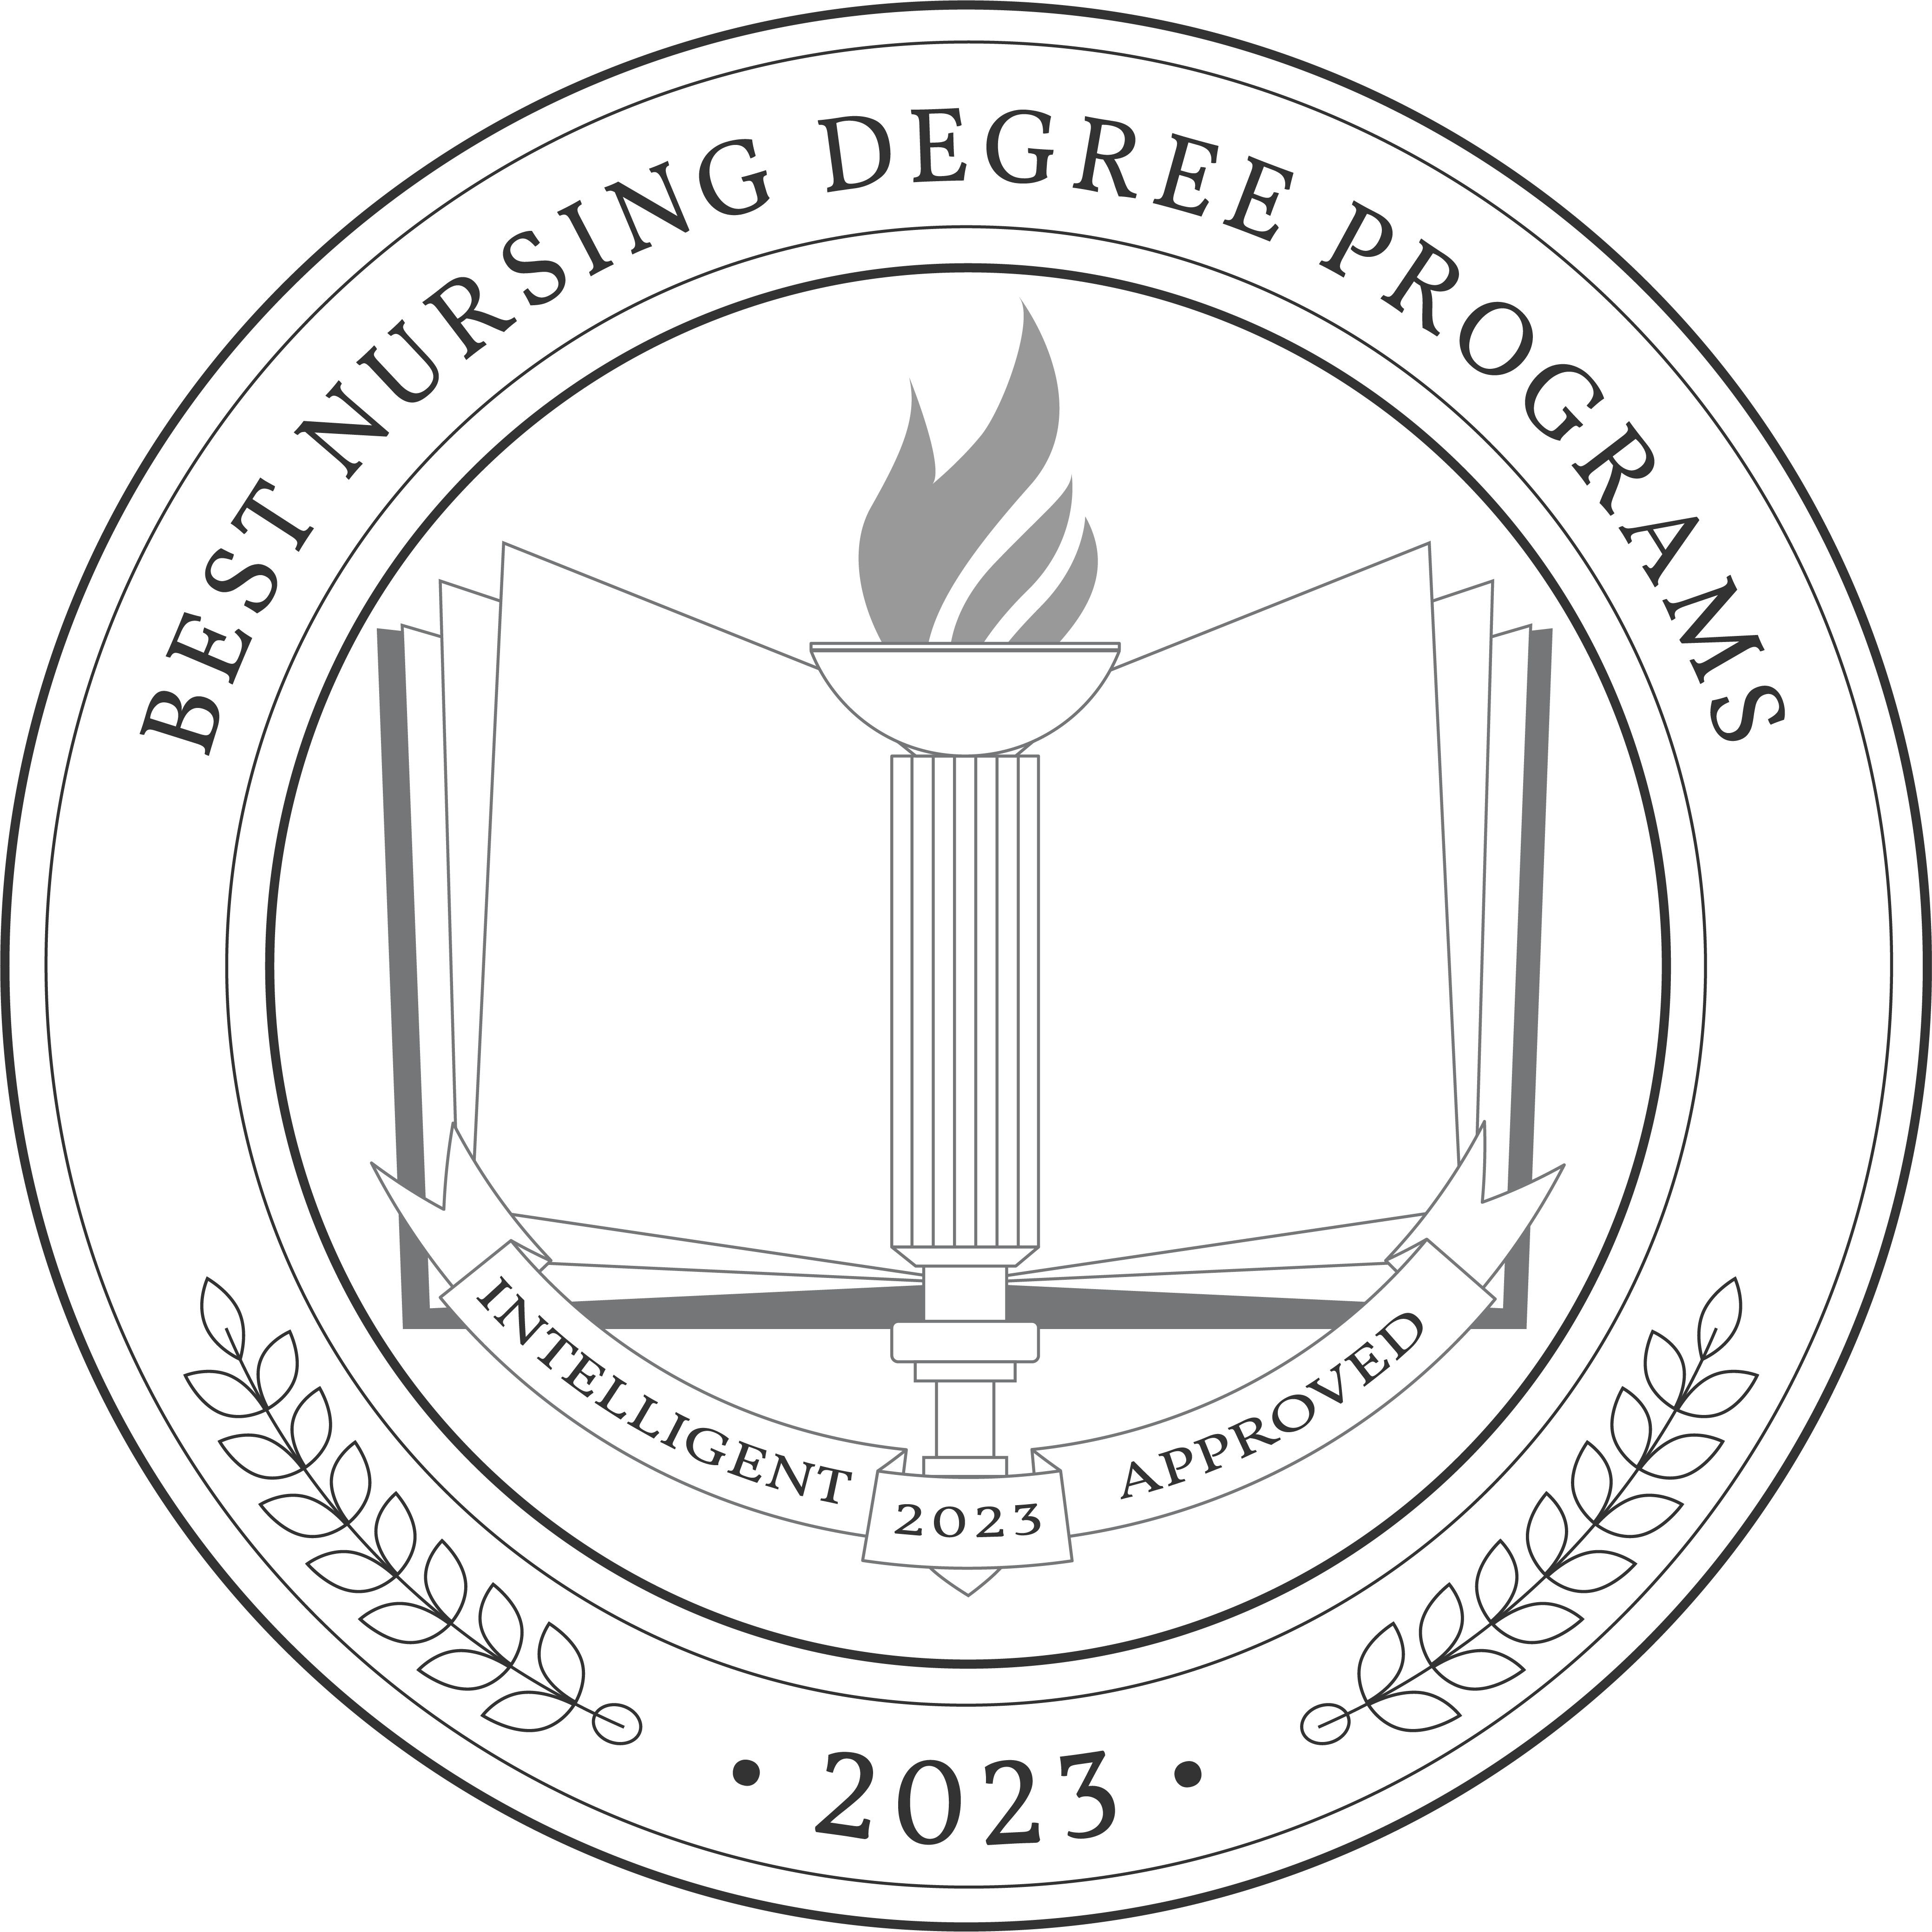 https://www.intelligent.com/wp-content/uploads/2022/11/Best-Nursing-Degree-Programs-2023-Badge.png